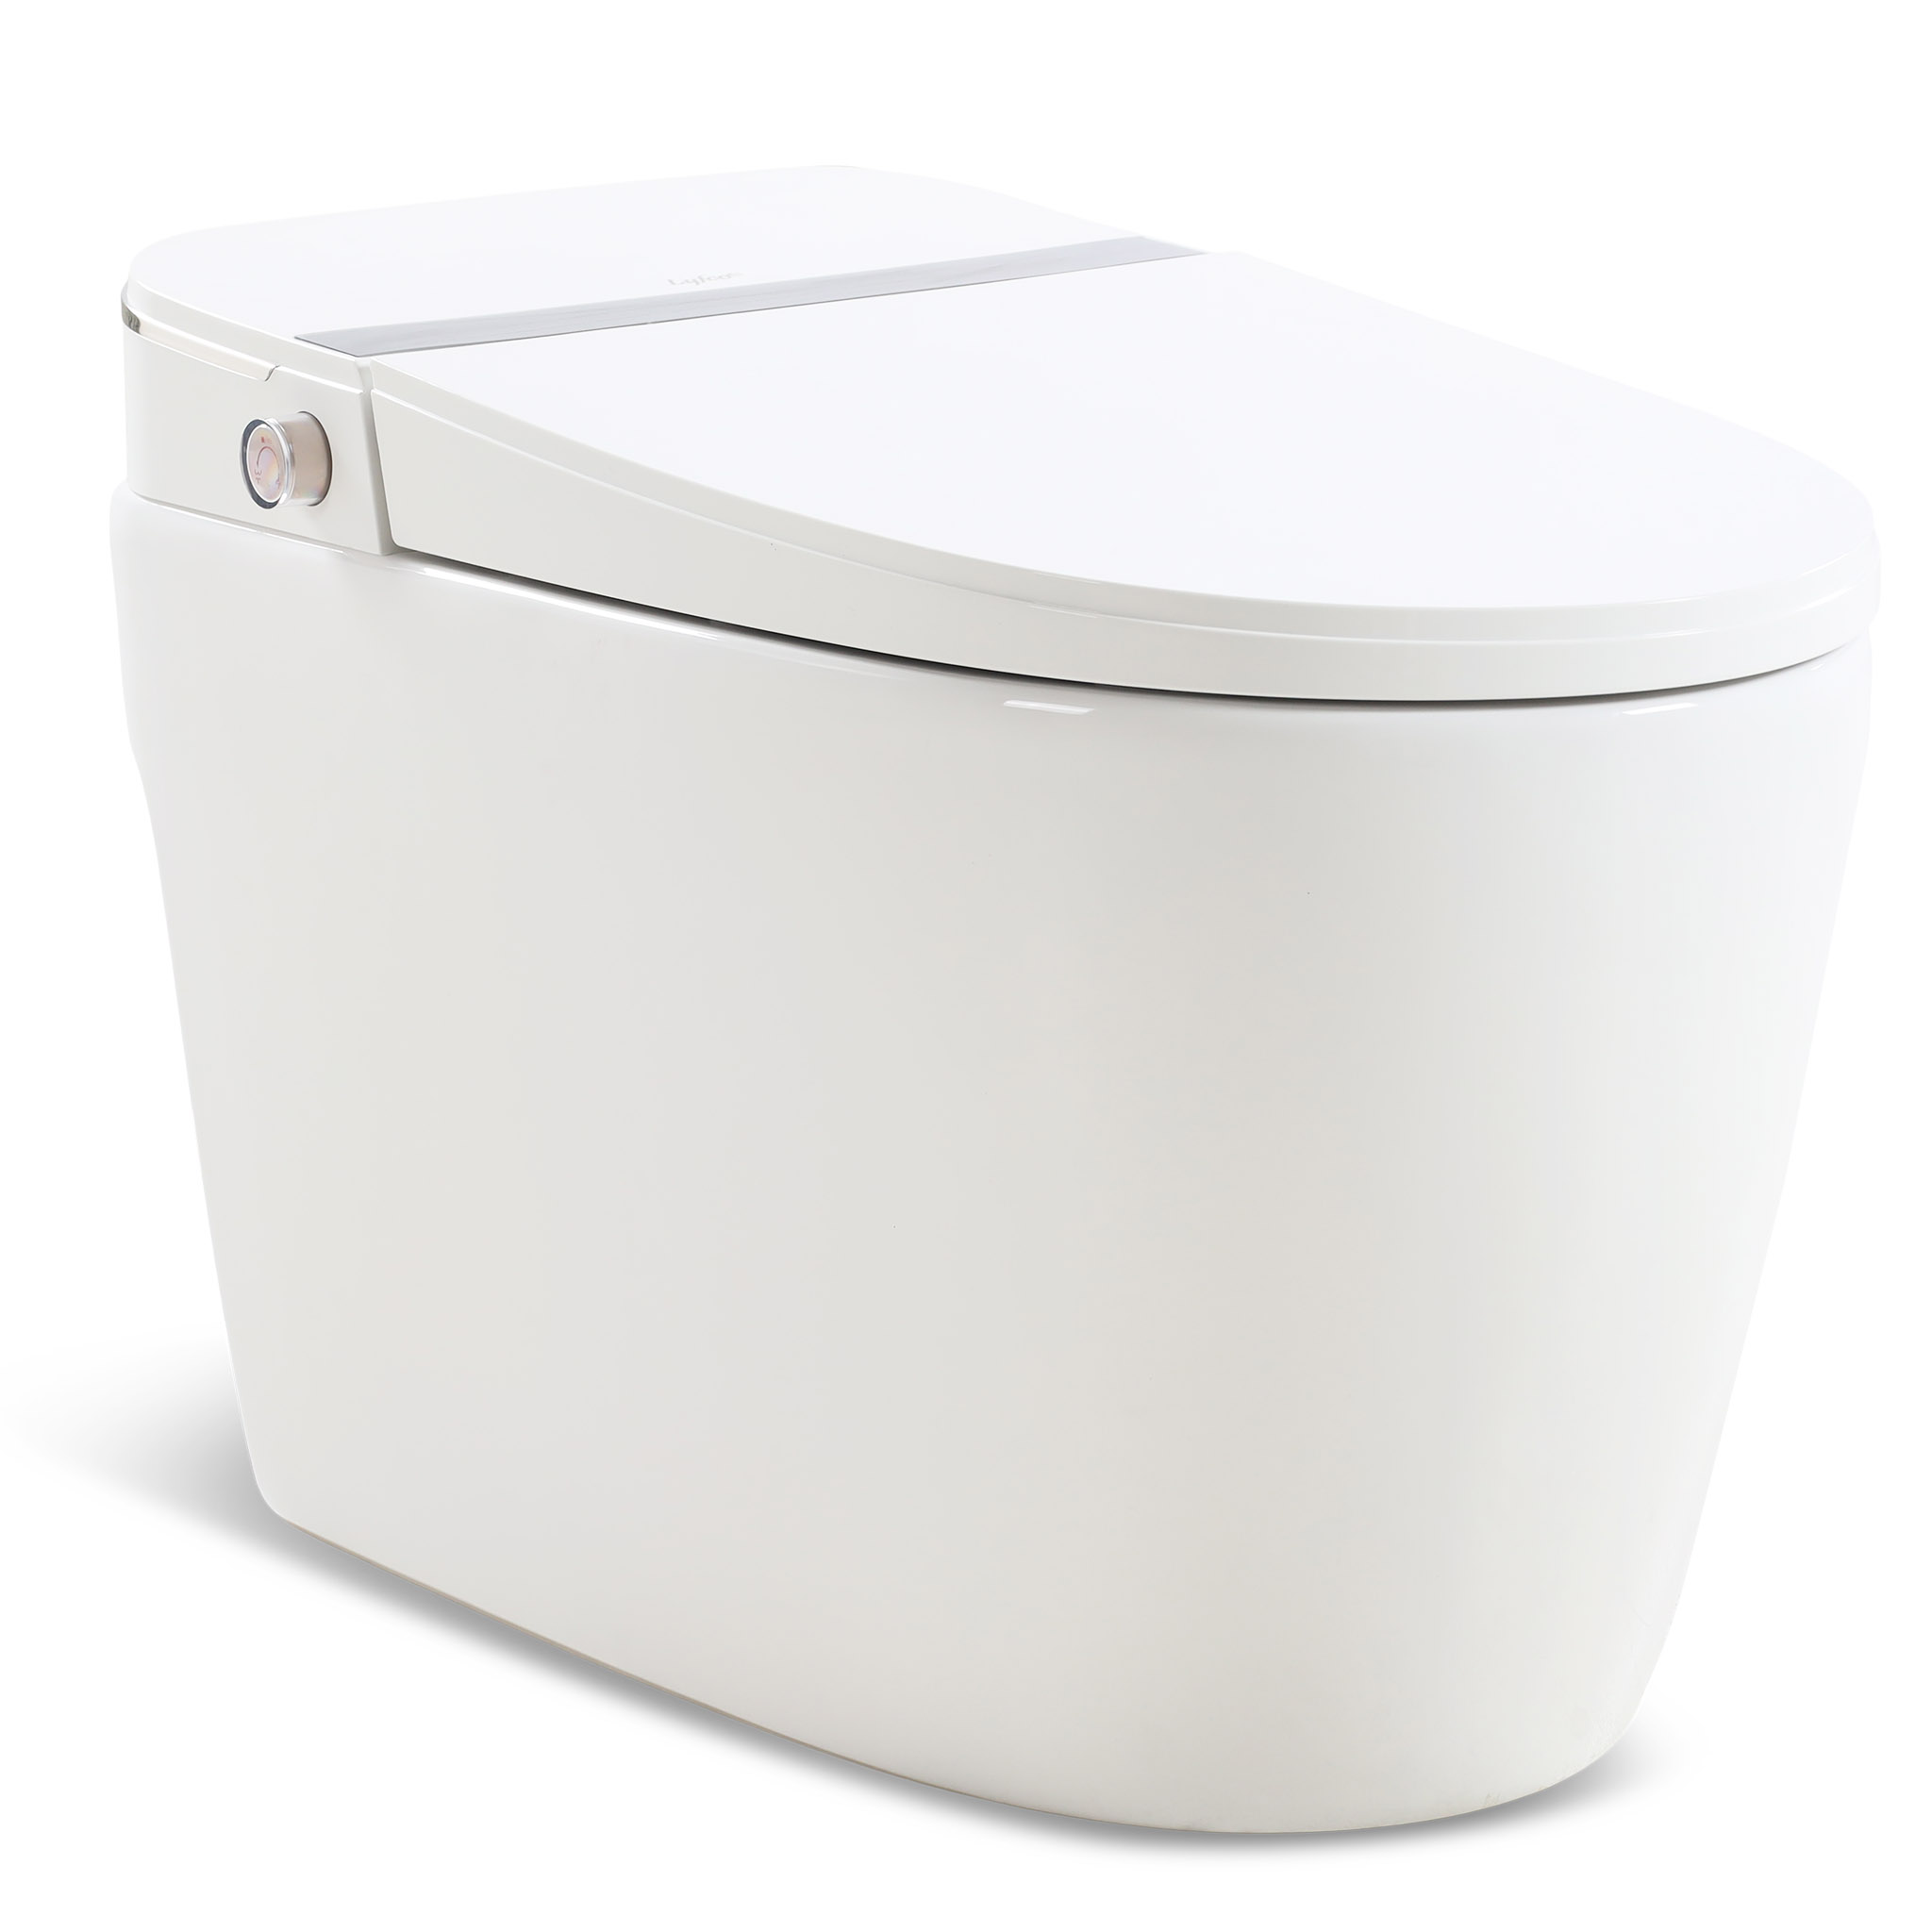 Smart toalett med dusch/bidéfunktion & LED-display